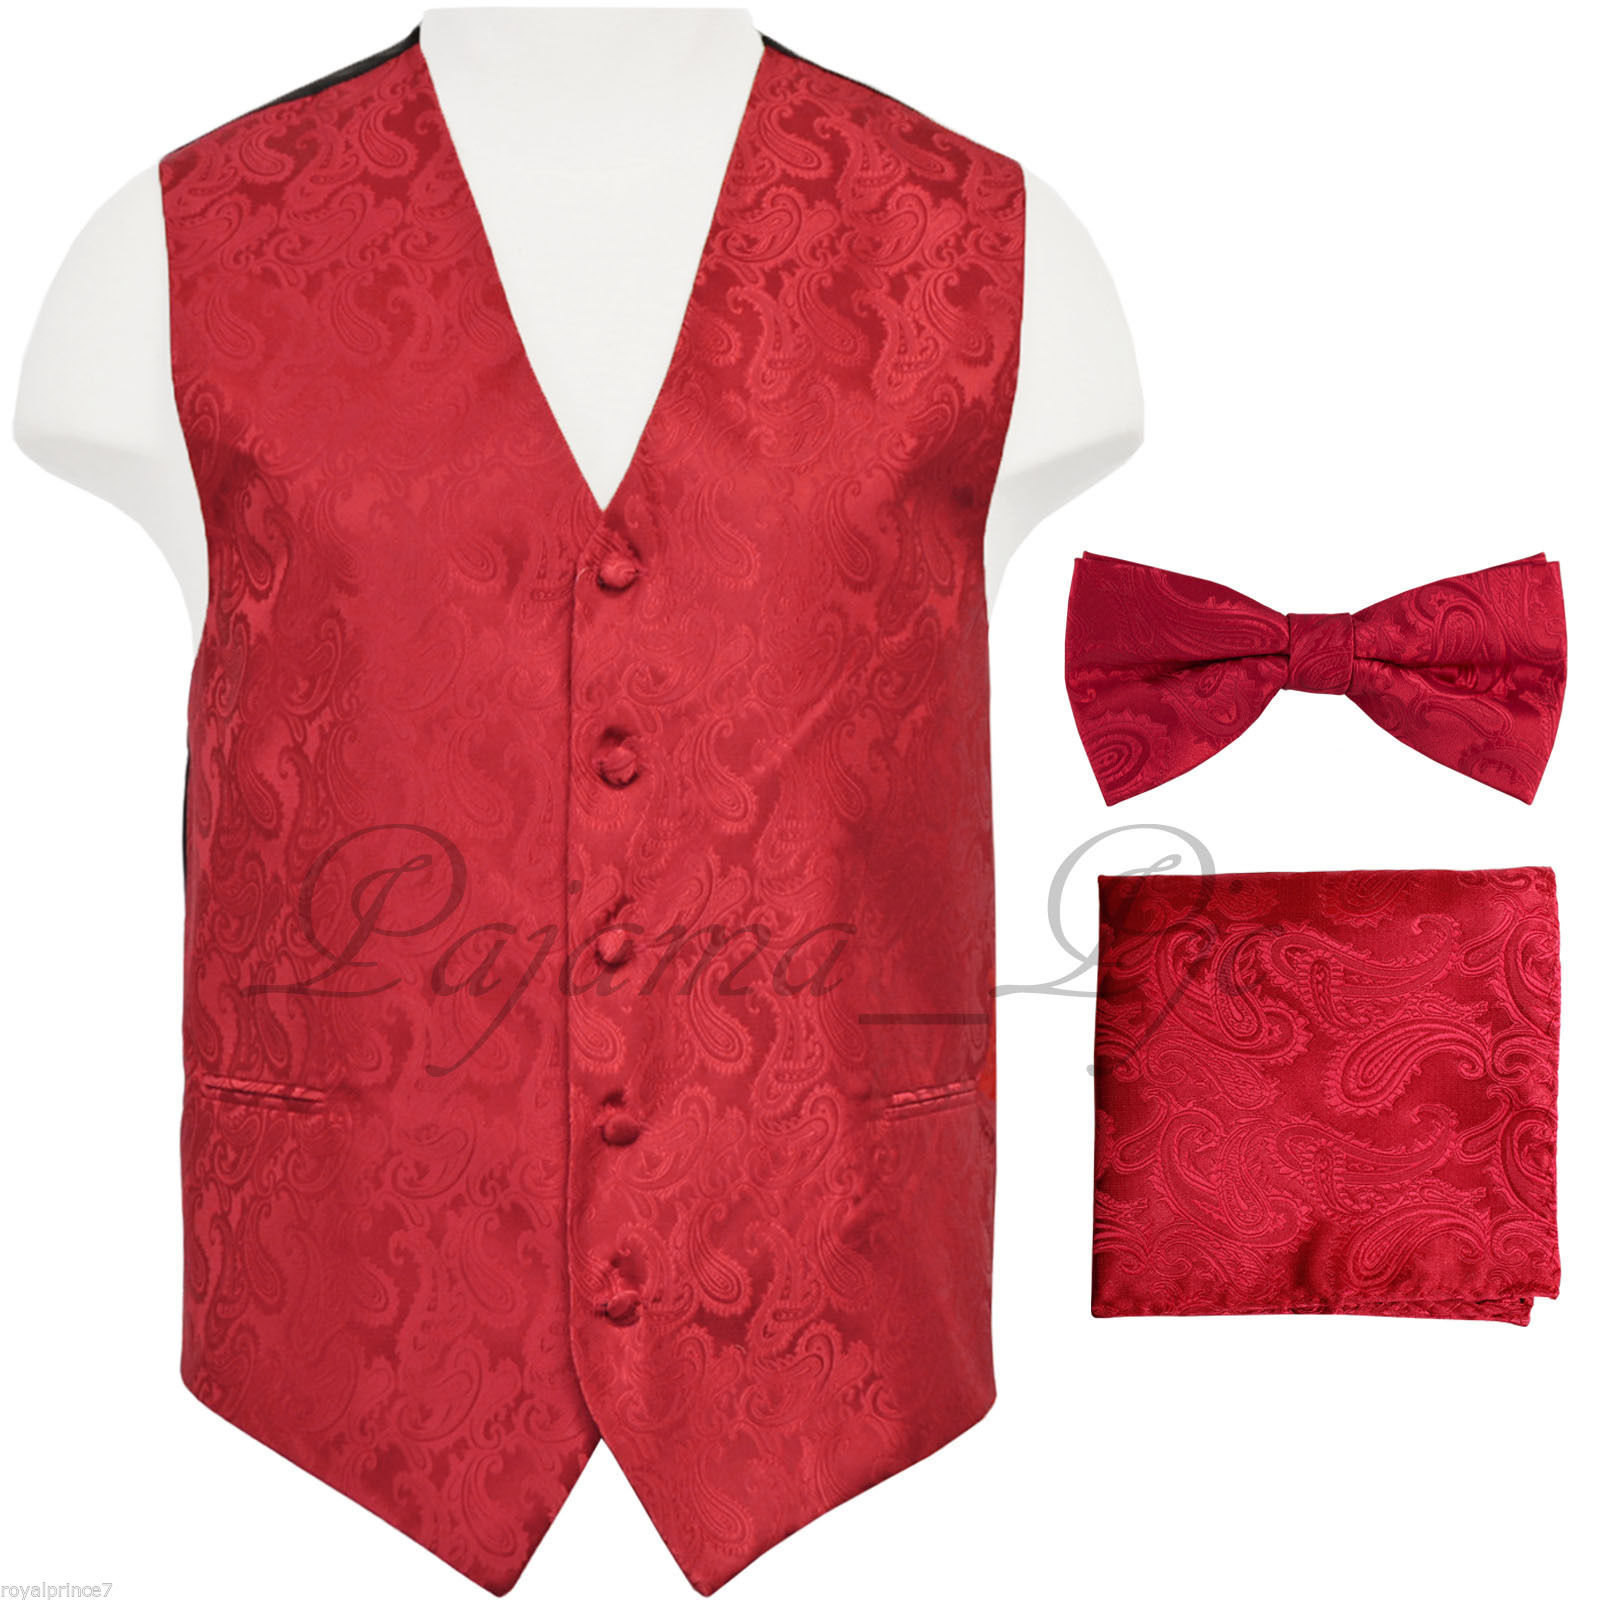 Red Paisley Vest Waistcoat & Bow tie Hanky Formal Wedding Prom Tuxedo Suit  - $25.11 - $30.06